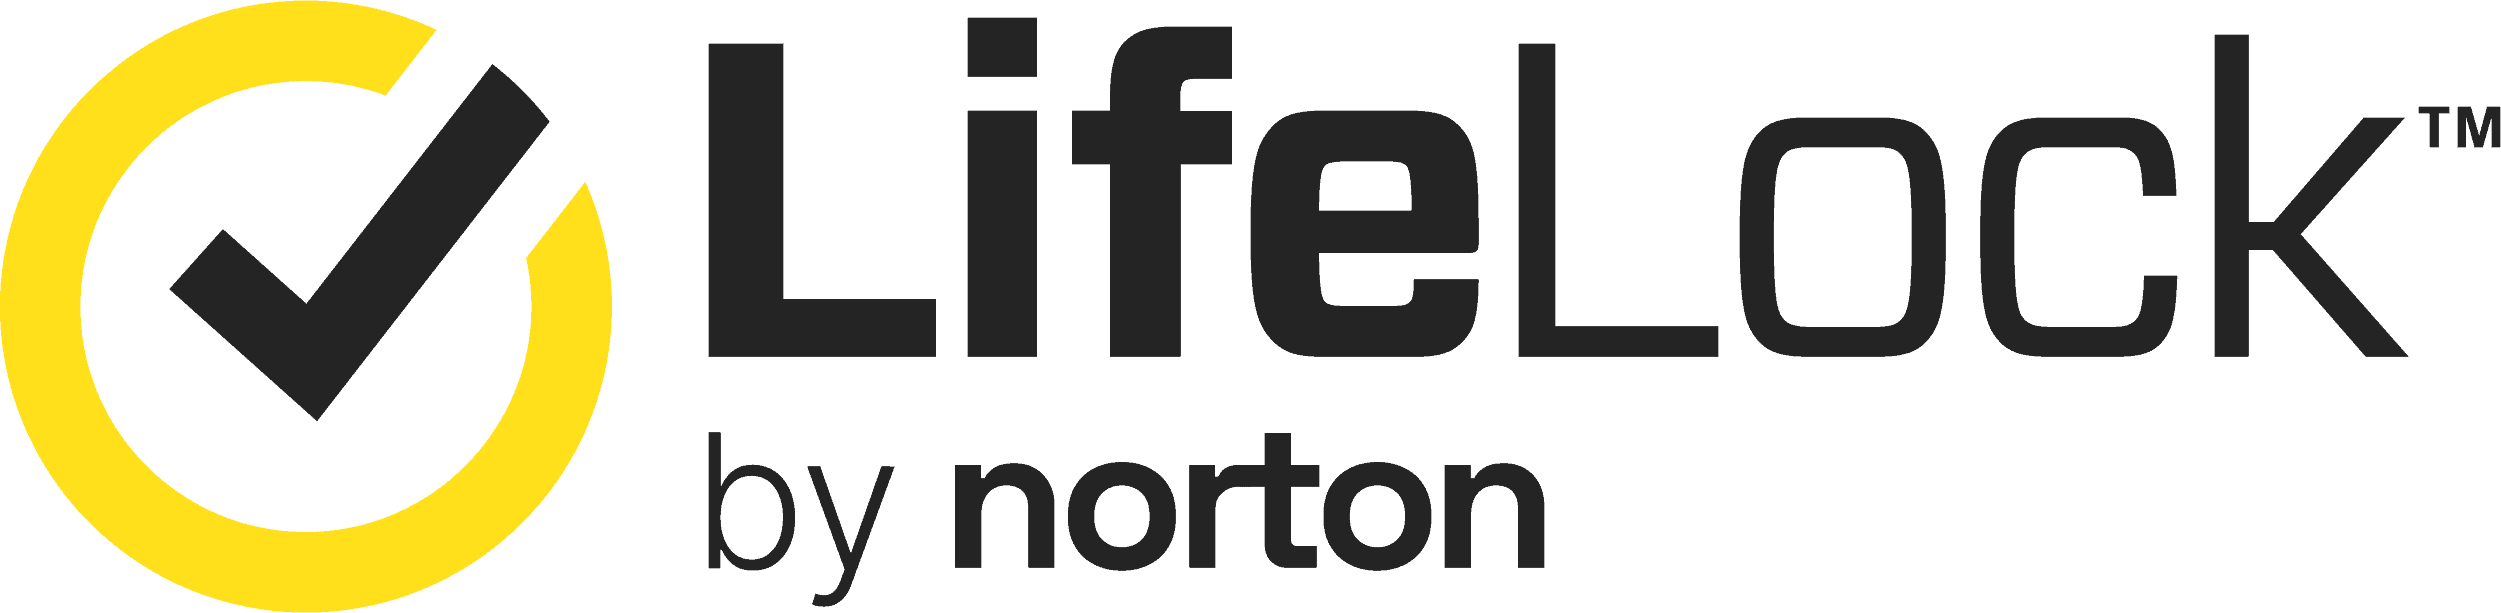 LifeLock by Norton - Product Logo